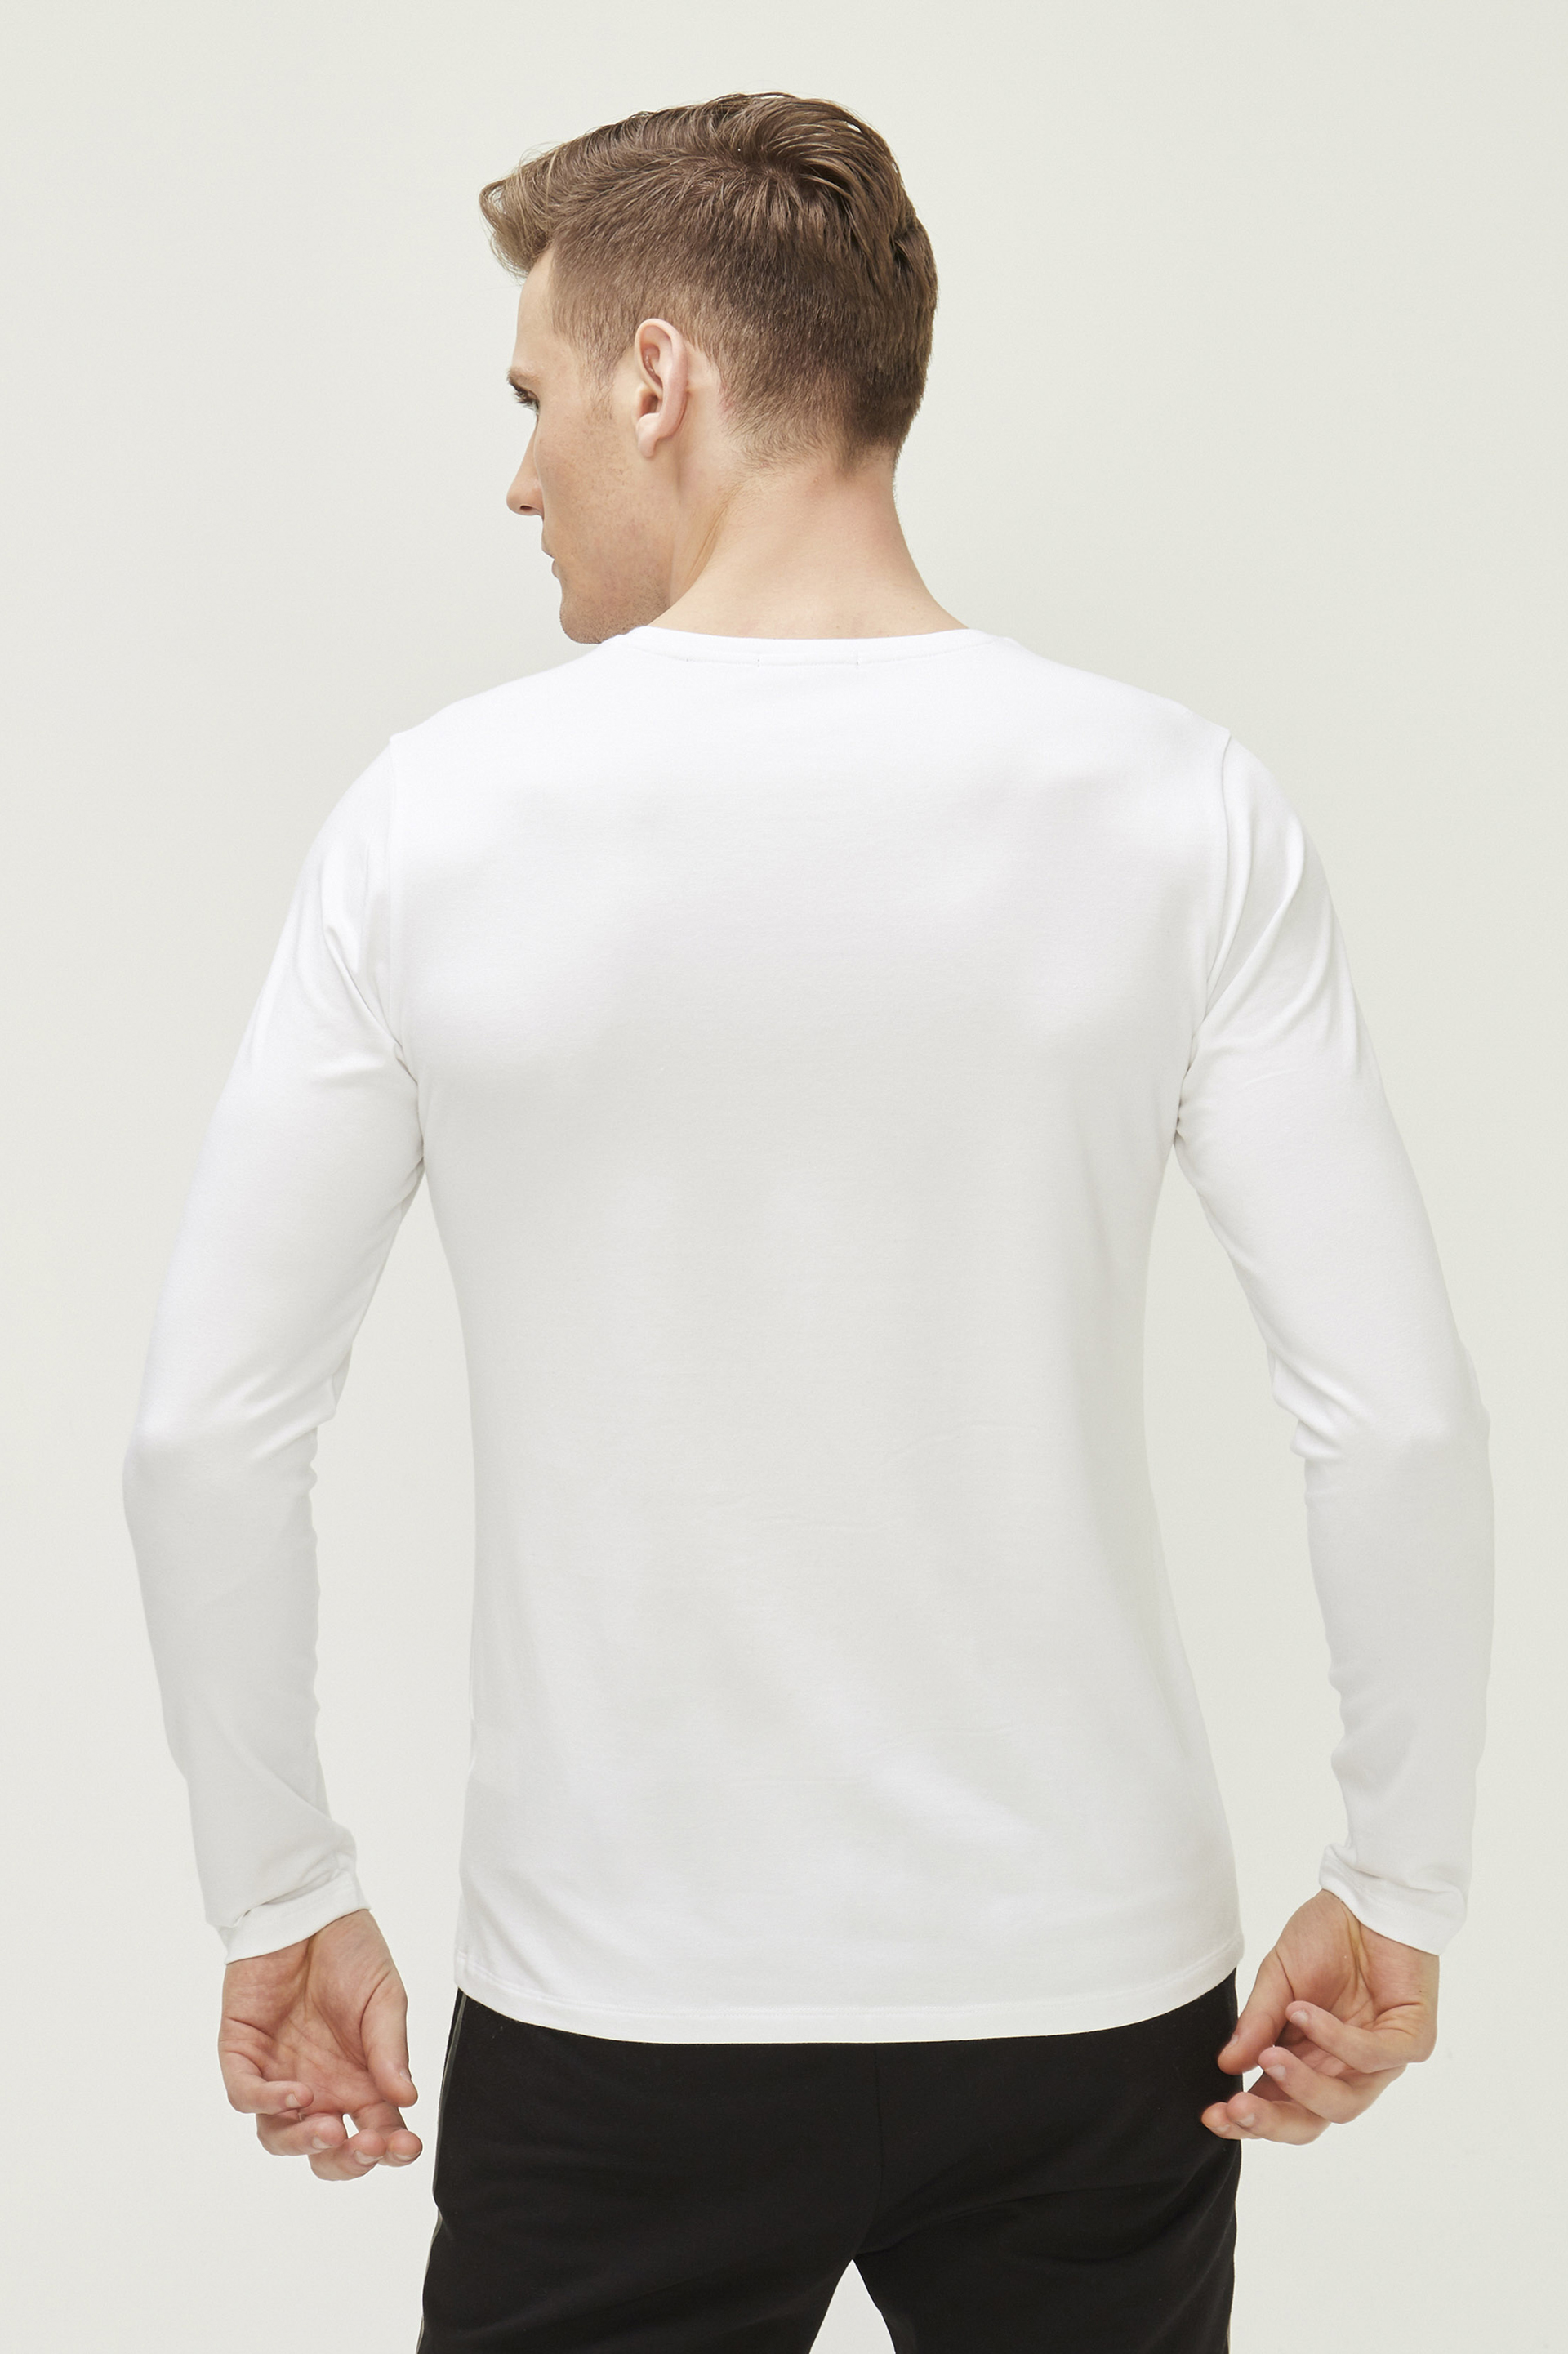 T-krekls ar garām rokām XINT 501561-BEYAZ